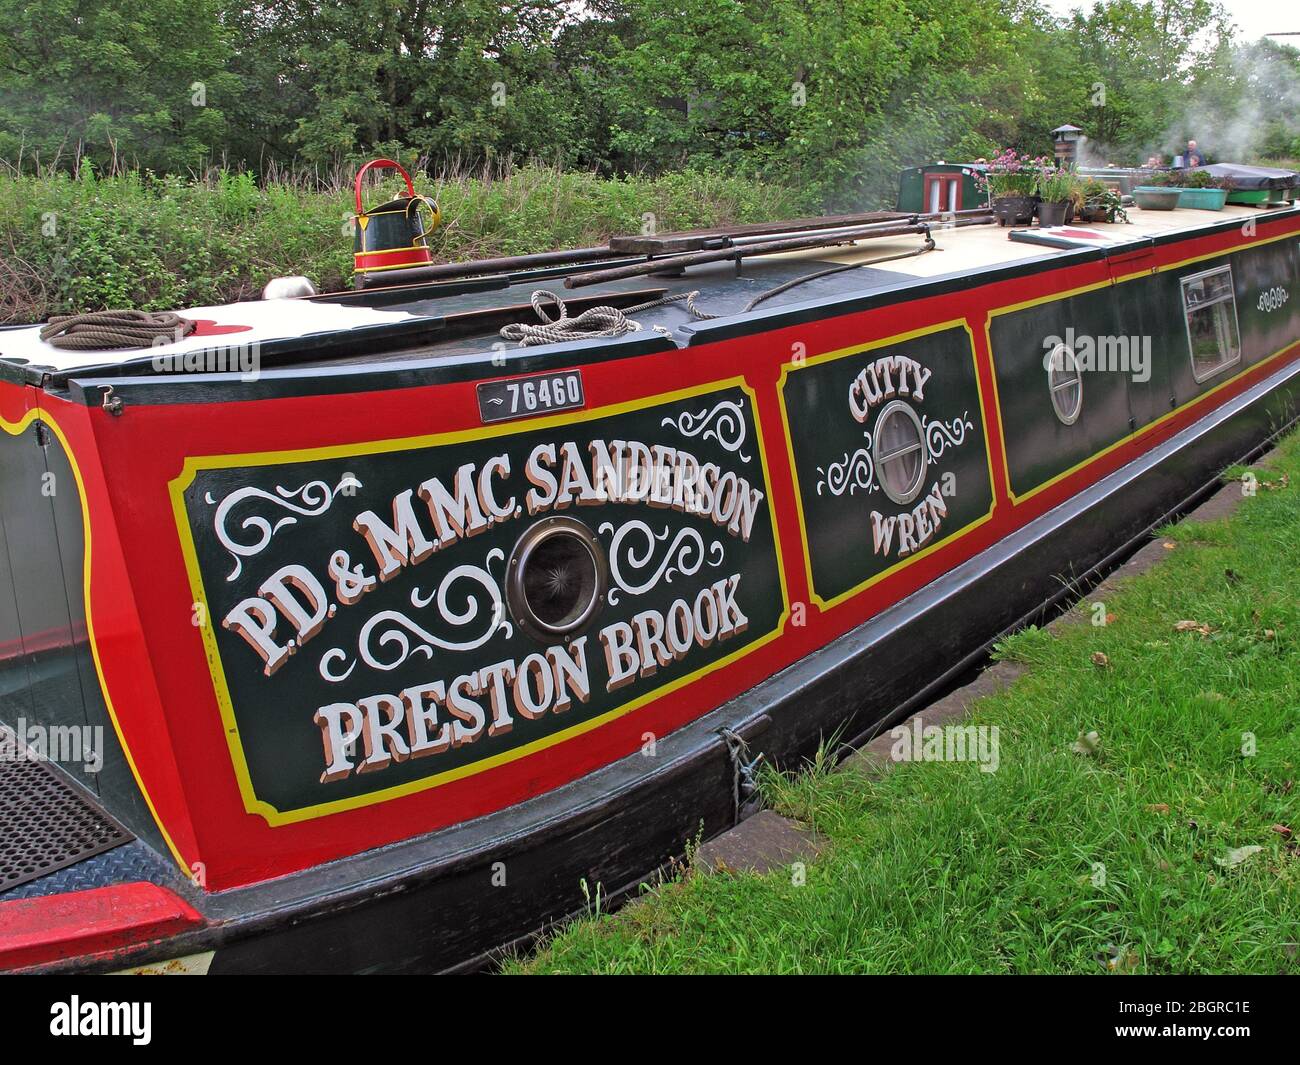 PD MMC Sanderson Preston Brook Cutty Wren,Waterway Canal Boat,narrowboat,Angleterre,Grande-Bretagne,Royaume-Uni Banque D'Images